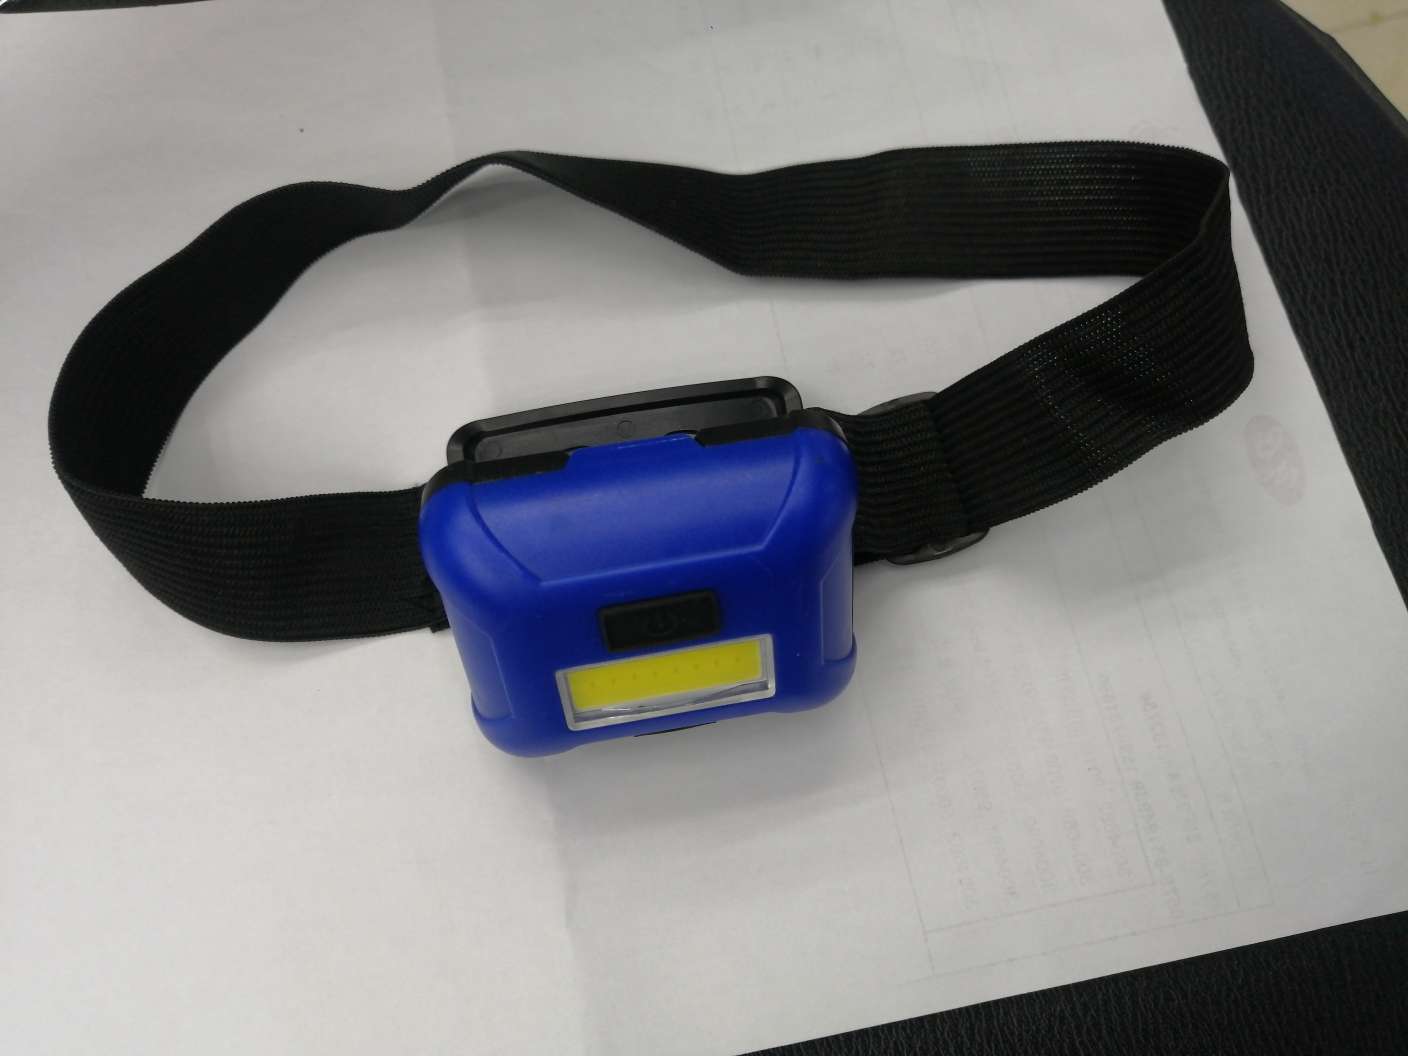 USB头灯    型号397A   材料塑料   灯泡USB   USB充电用途  野外照明，